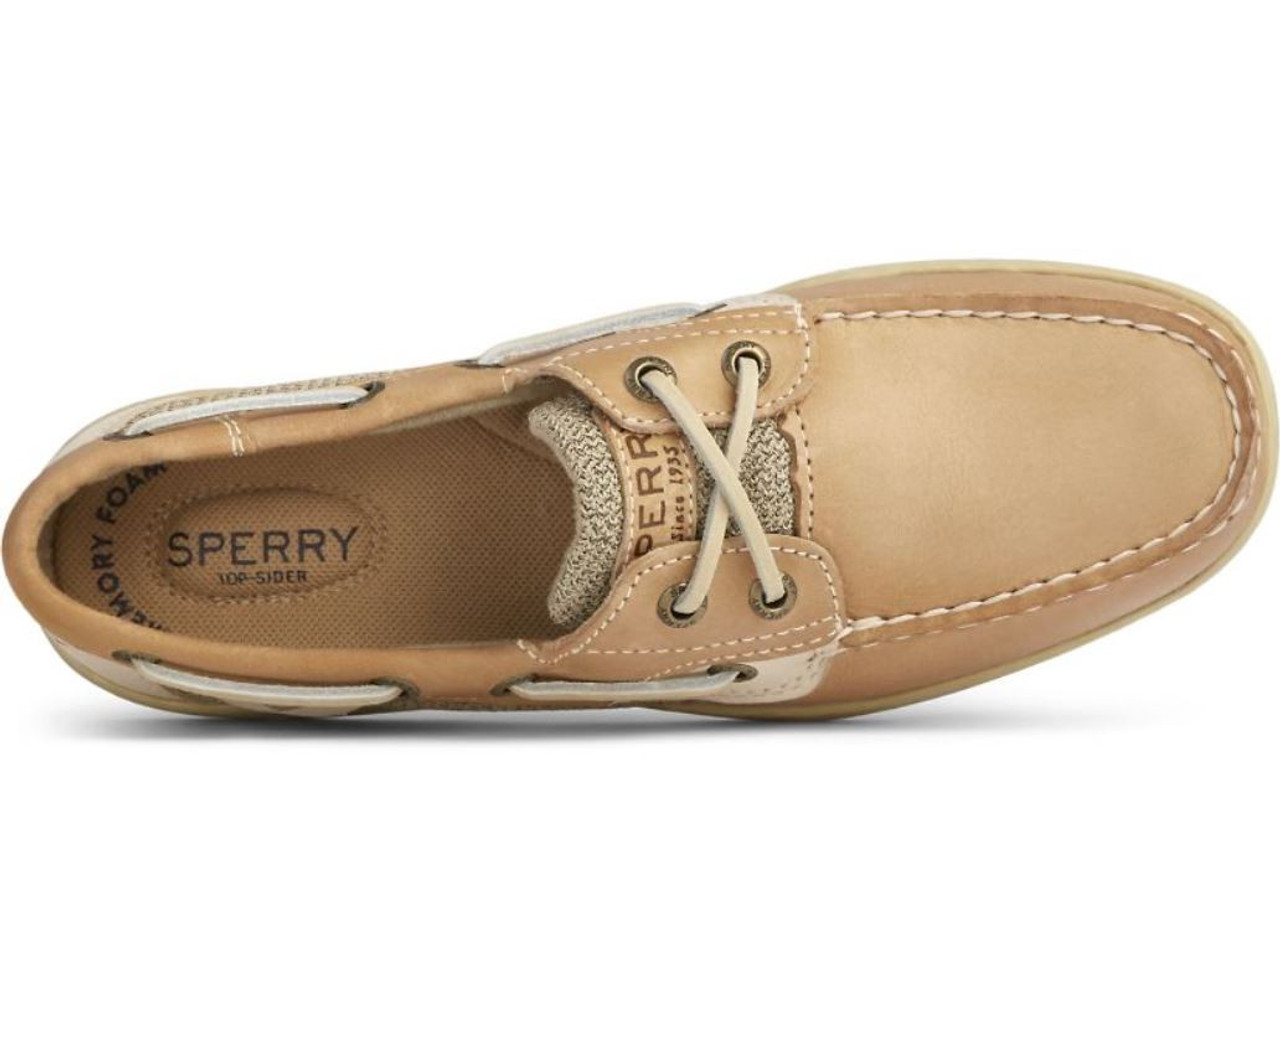 Women's Sperry Bluefish Boat Shoes - Linen/Oat